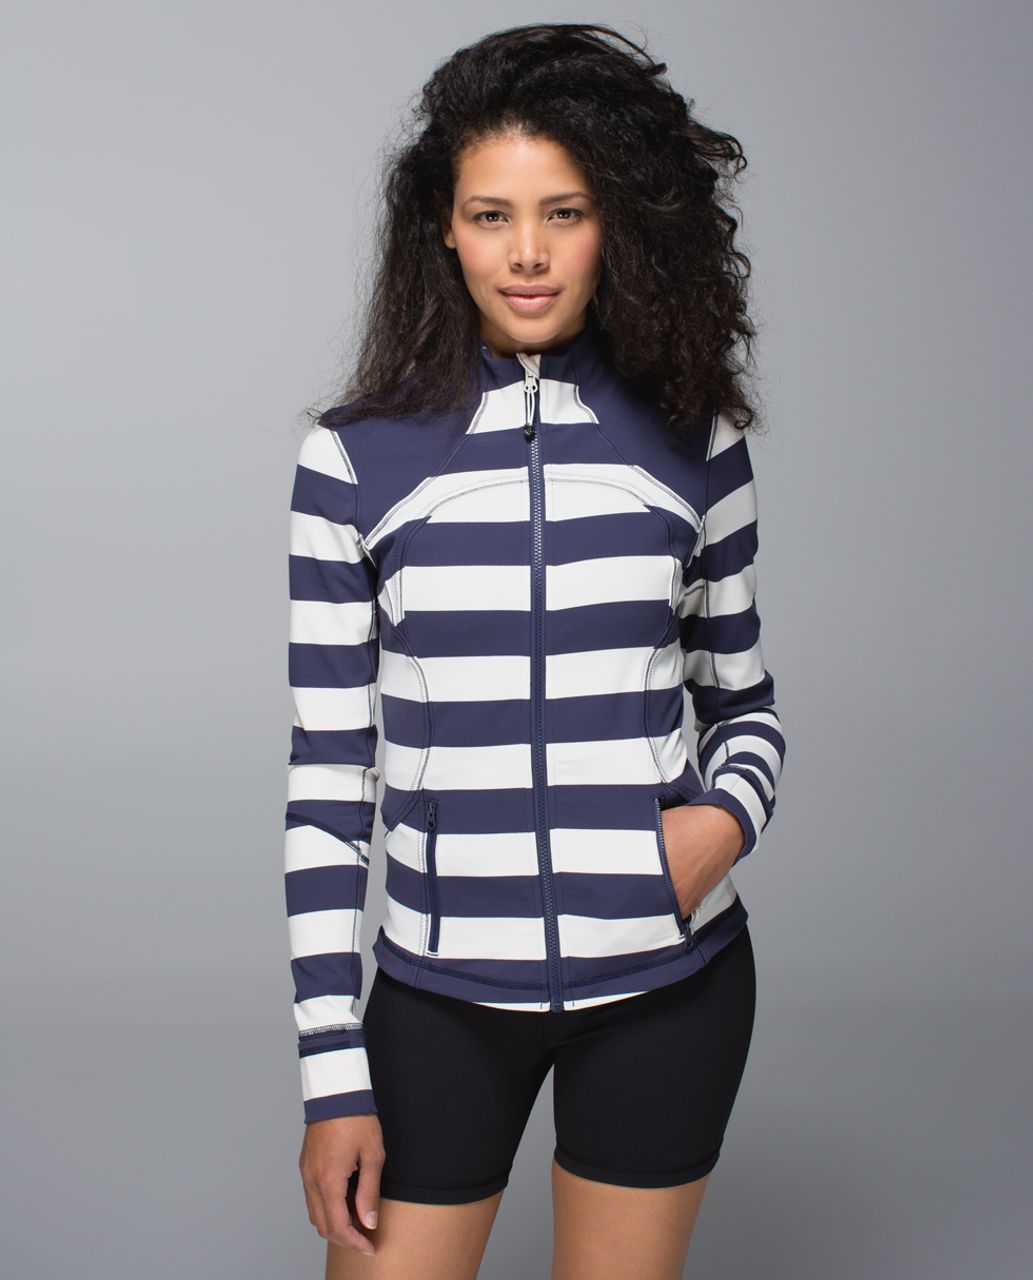 Lululemon Forme Jacket *Cuffins - Steep Stripe Cadet Blue Horizontal / Cadet Blue